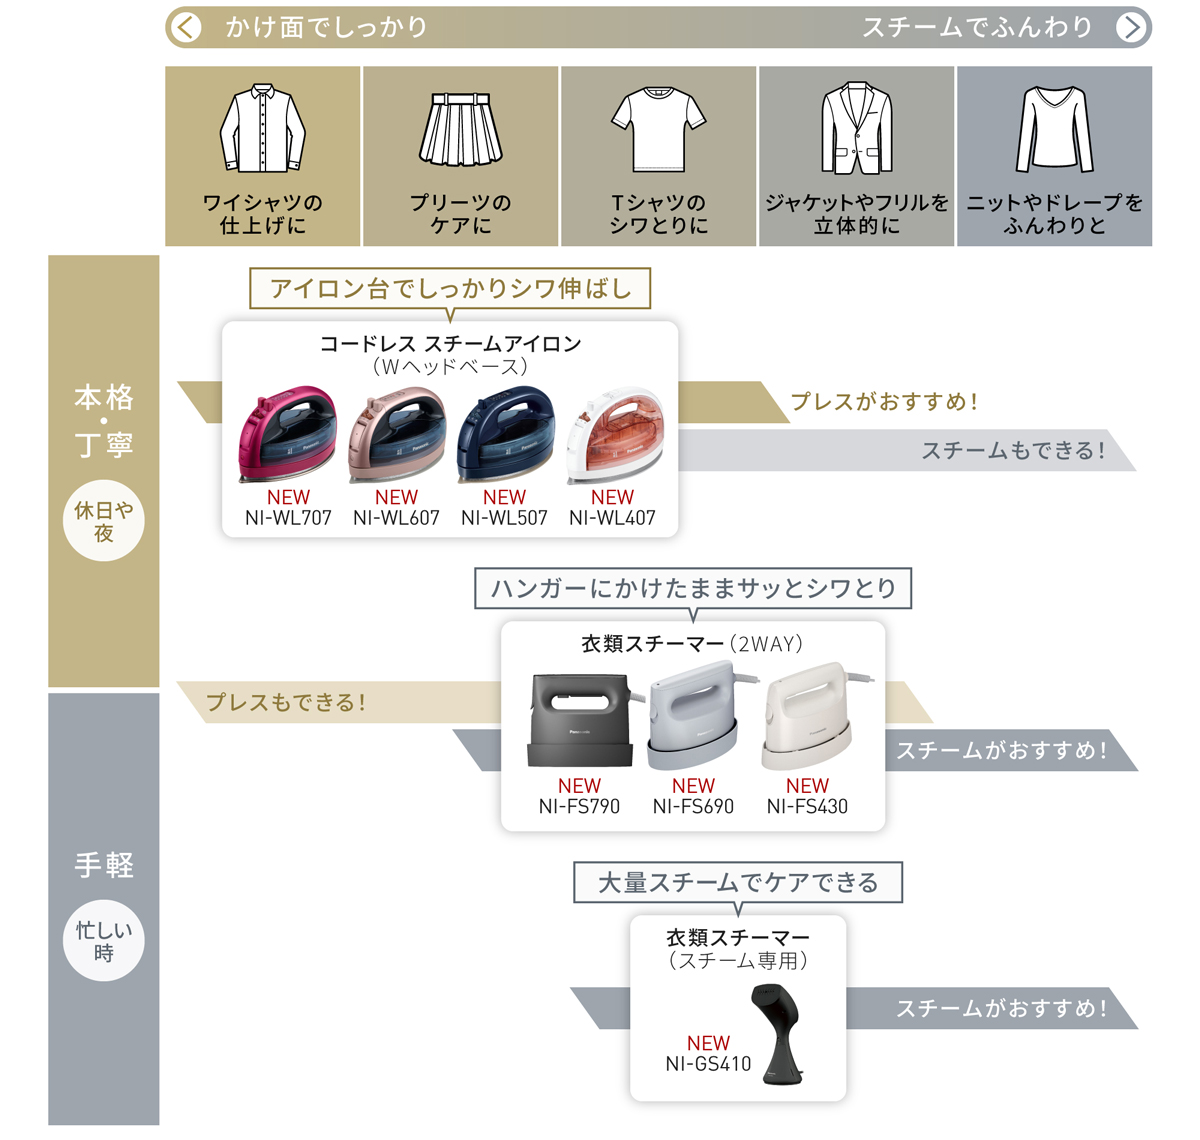 lineup selectchart 2 1200 - 衣類スチーマー【鬼比較】NI-FS430とNI-FS420 違い口コミ レビュー!